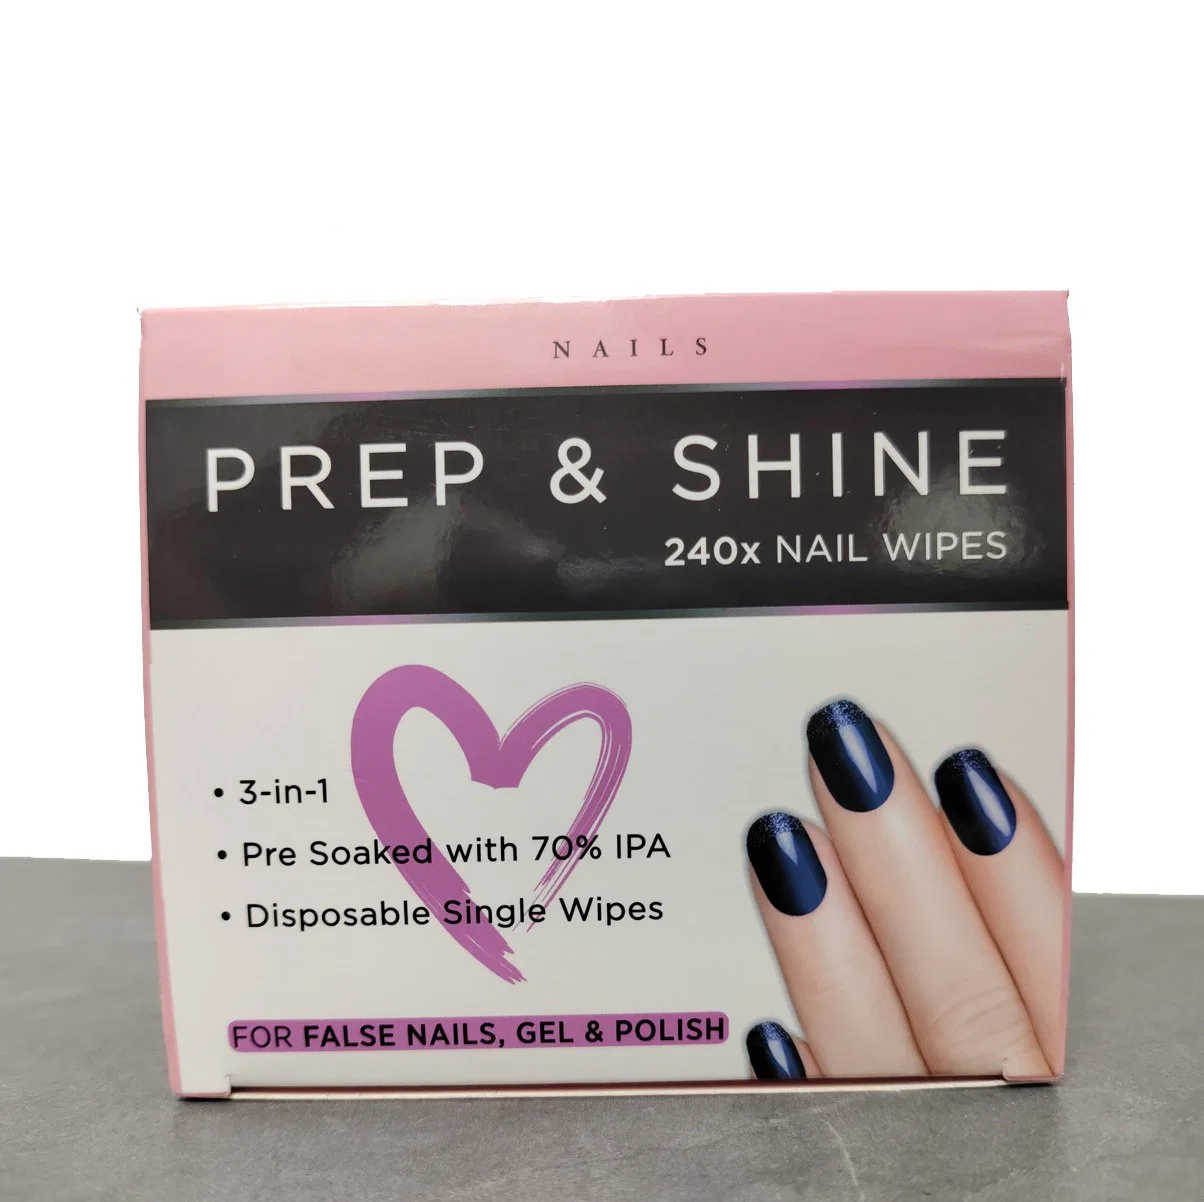 100PCS for False Nails Wet Wipe Pre Soaked Wipes 70% Ipa Wipe Prep Shine Nail Wipe